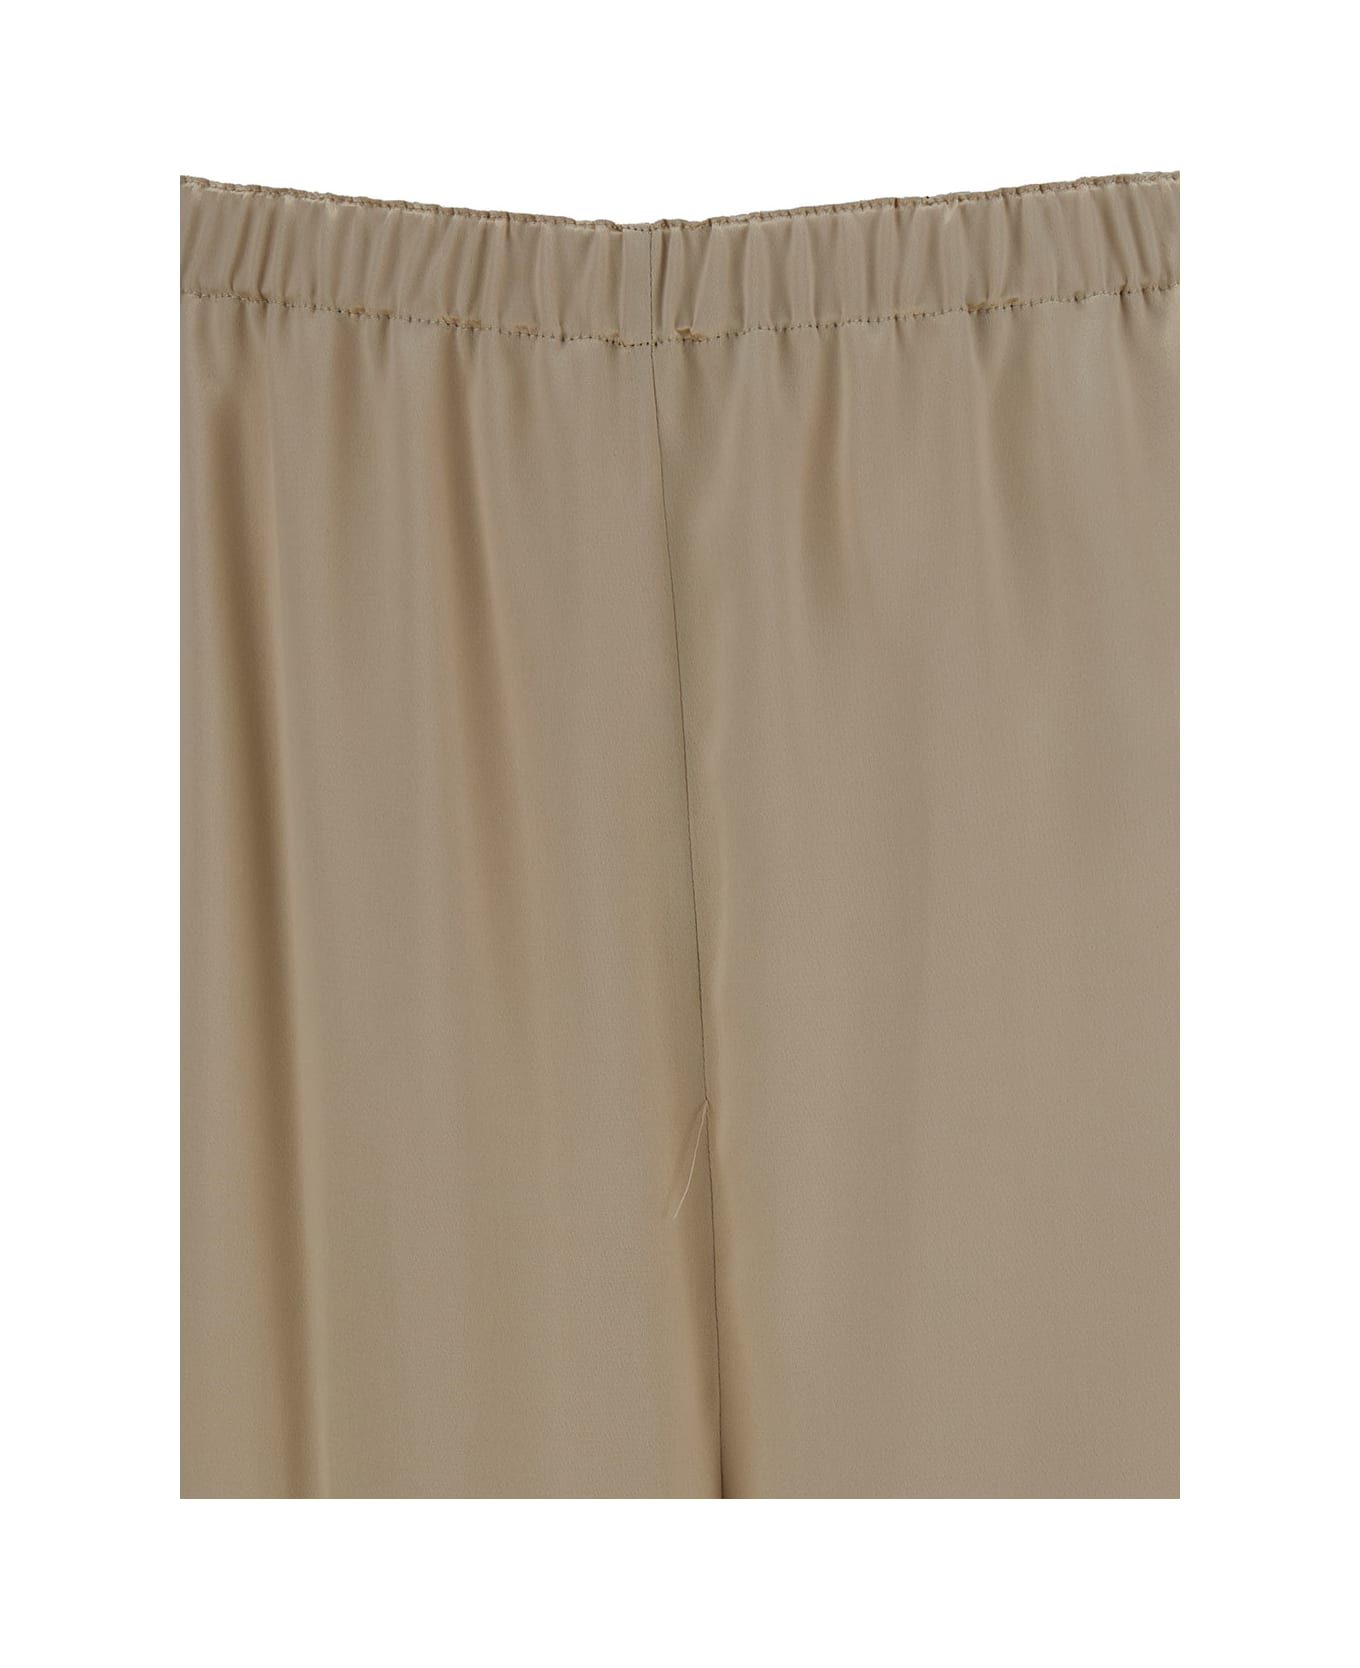 Ferragamo Beige Loose Pants With Elasticated Waist In Rayon Woman - Beige ボトムス